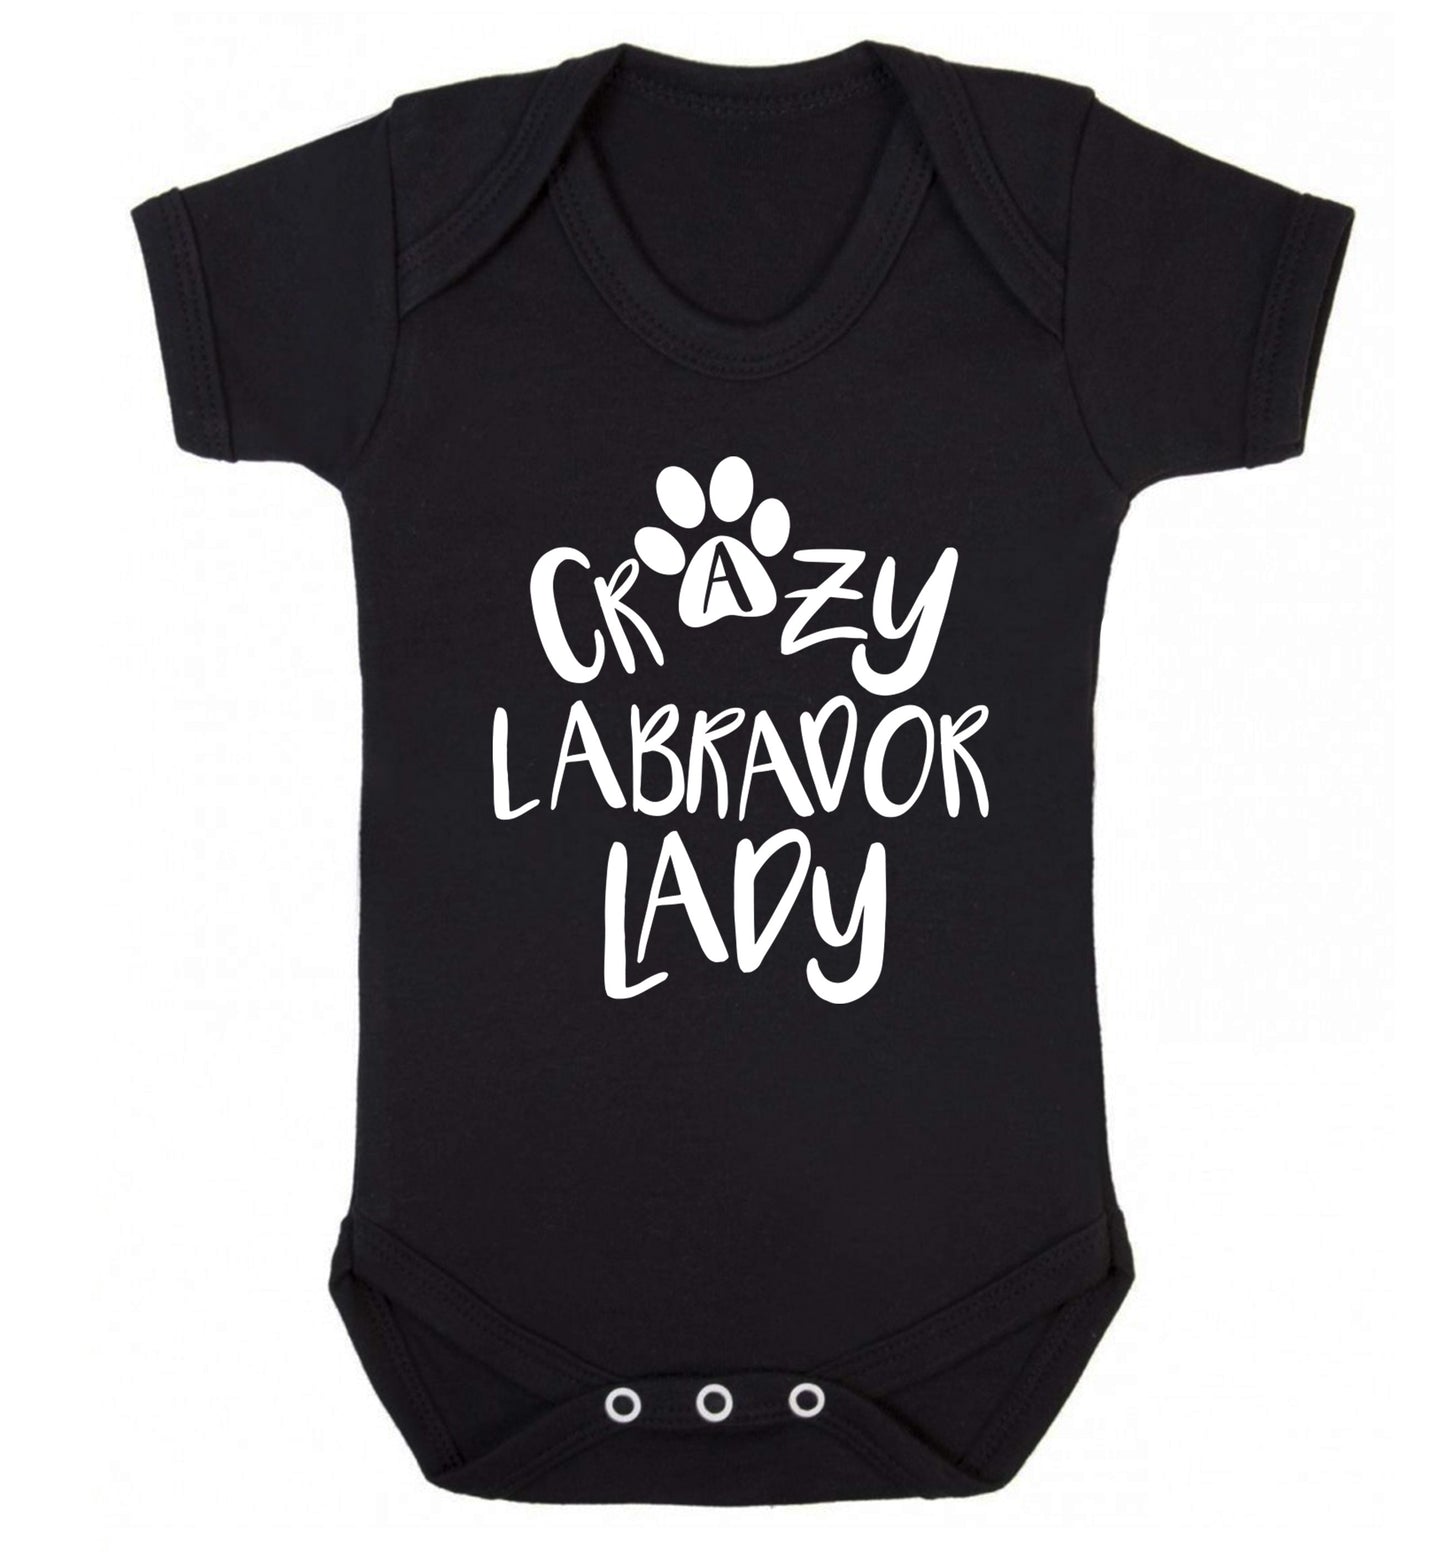 Crazy labrador lady Baby Vest black 18-24 months